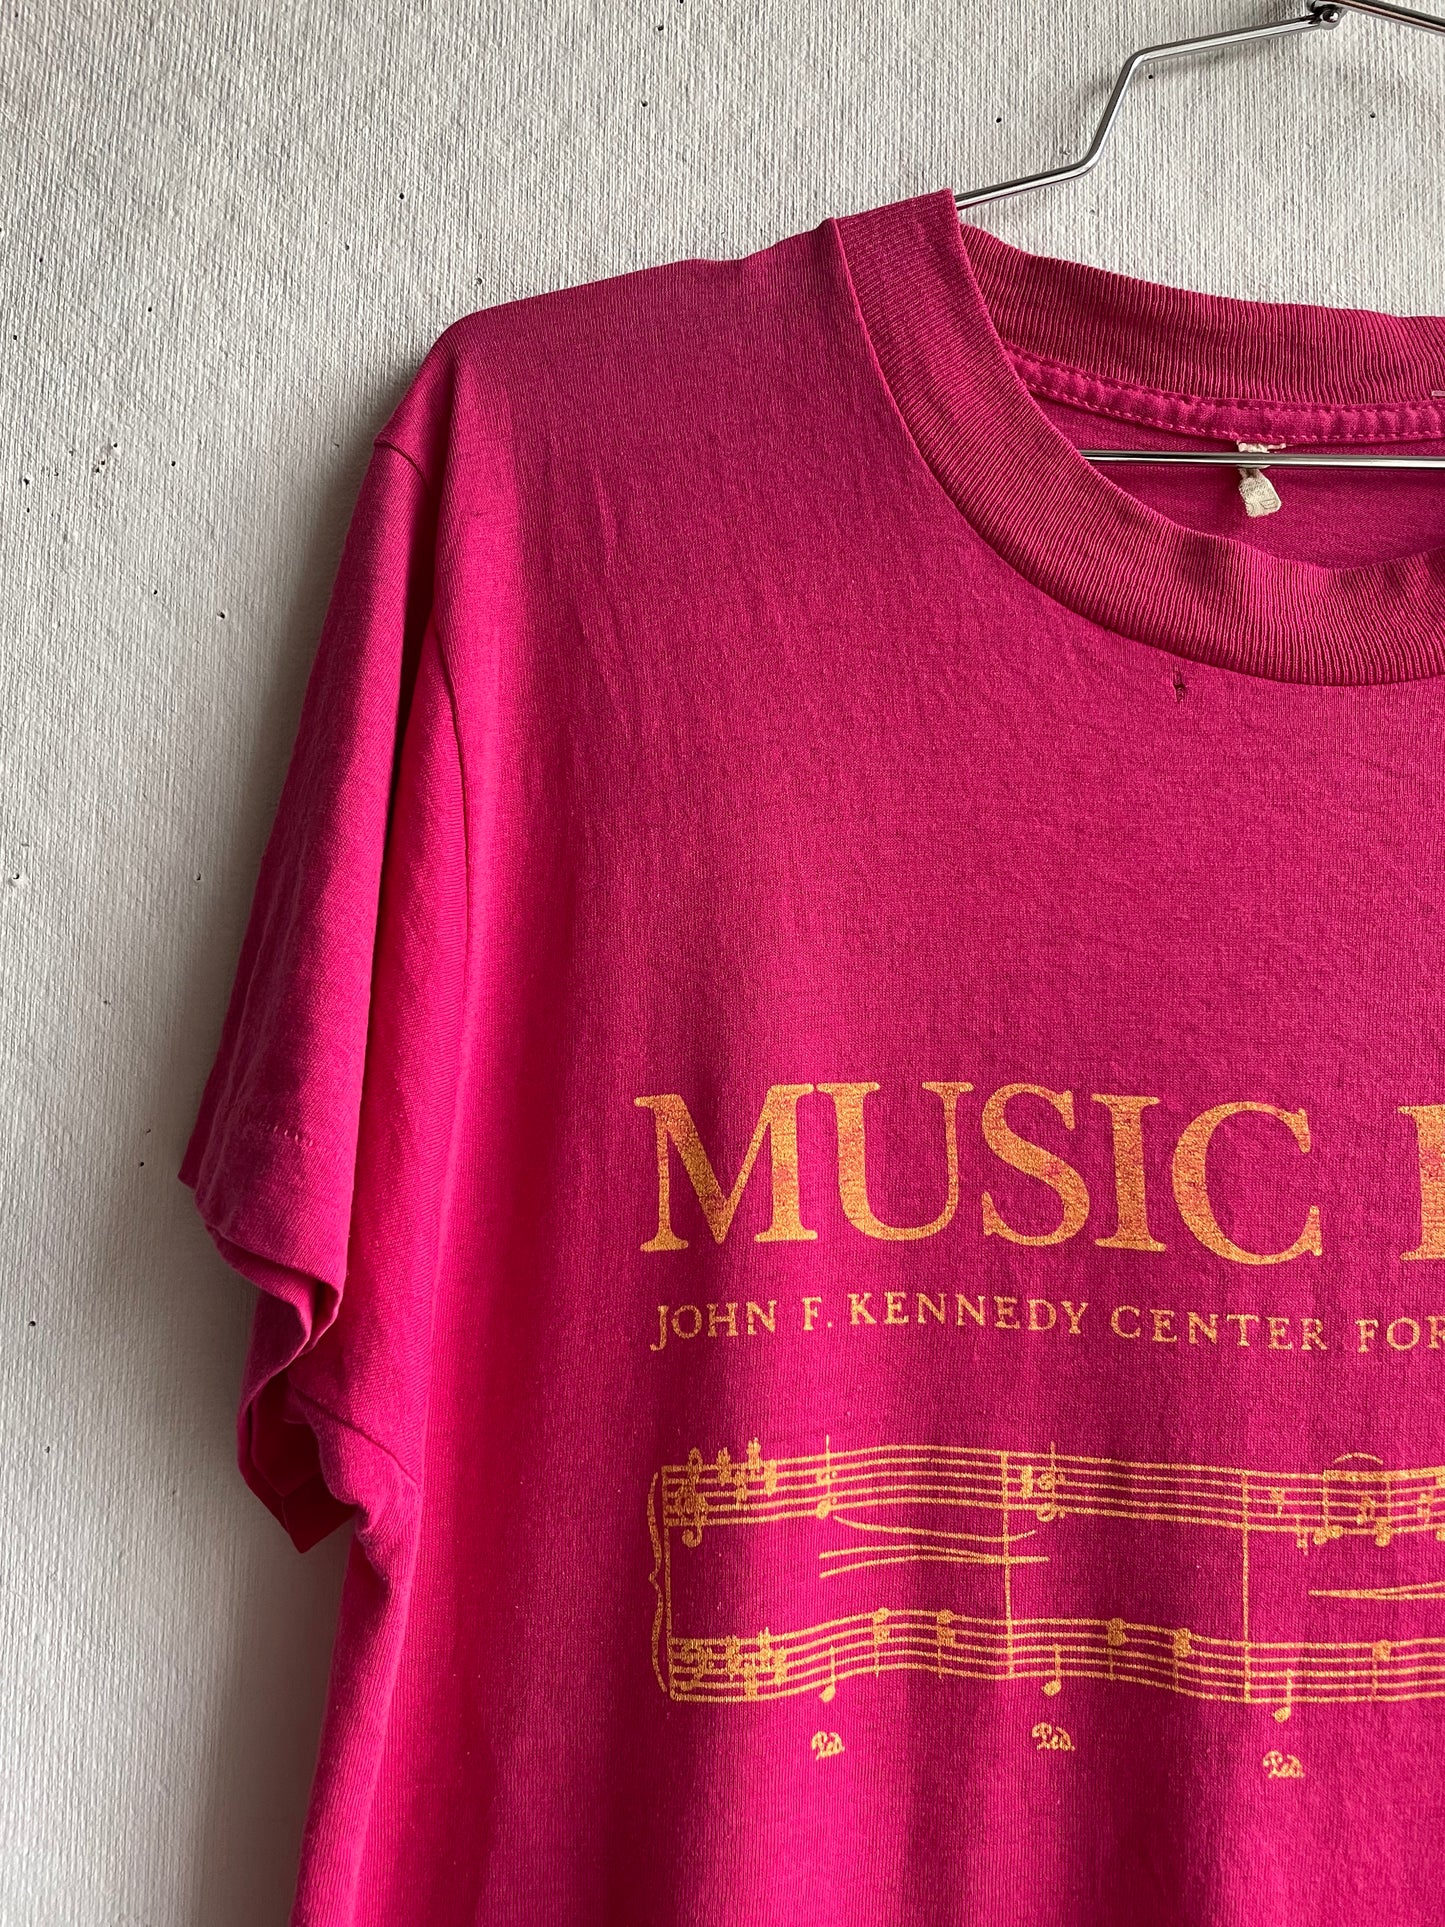 Vintage Music T-Shirt